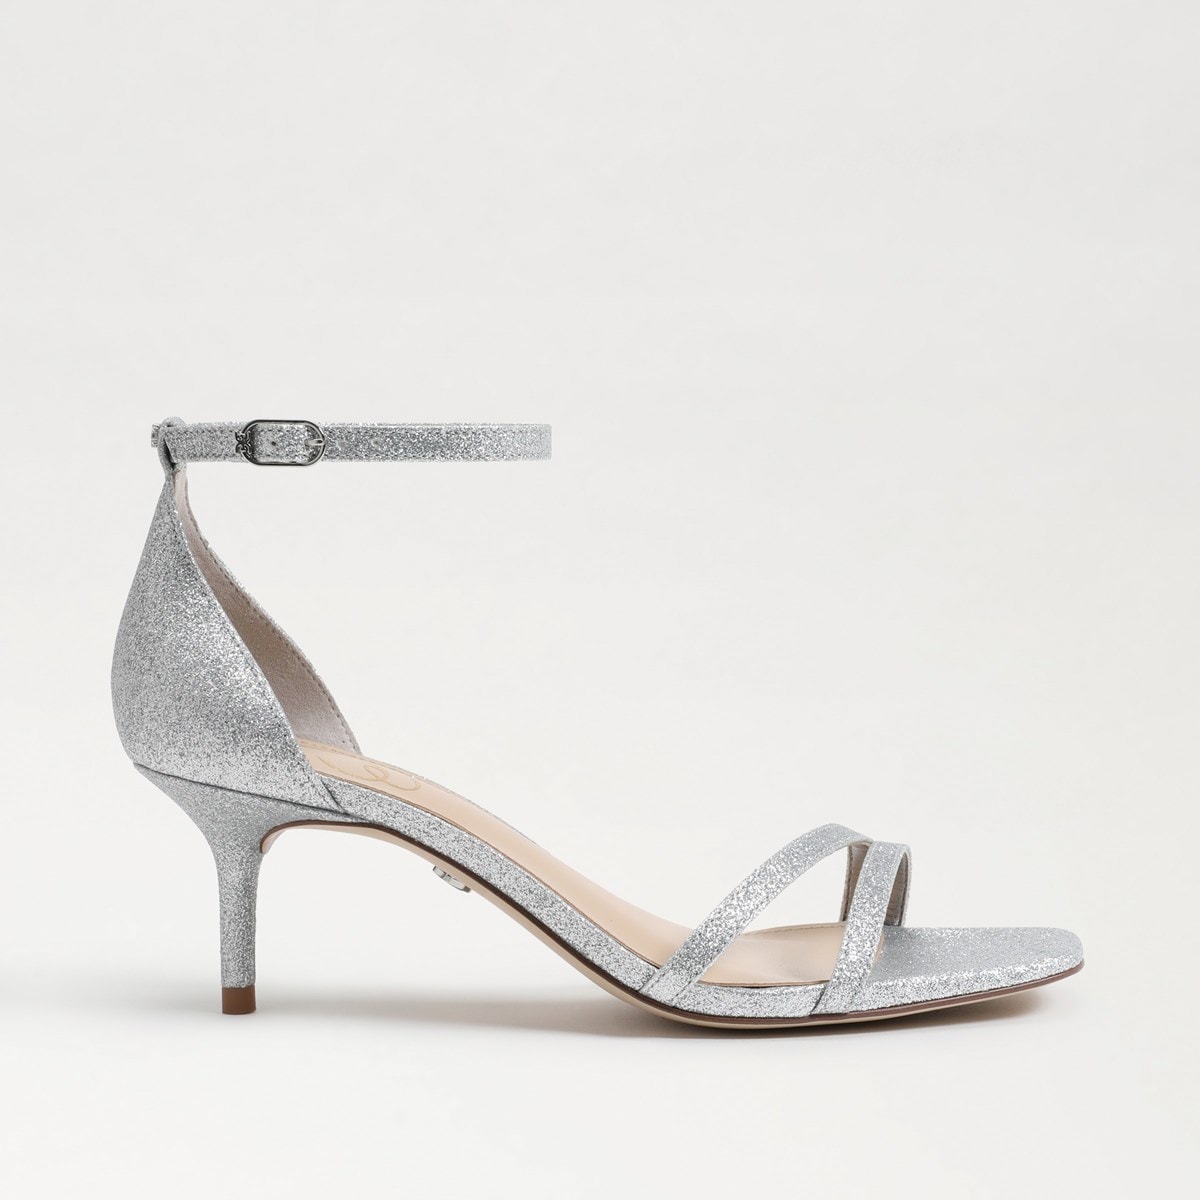 Sam Edelman Peonie Kitten Heel Sandal | Women's Sandals